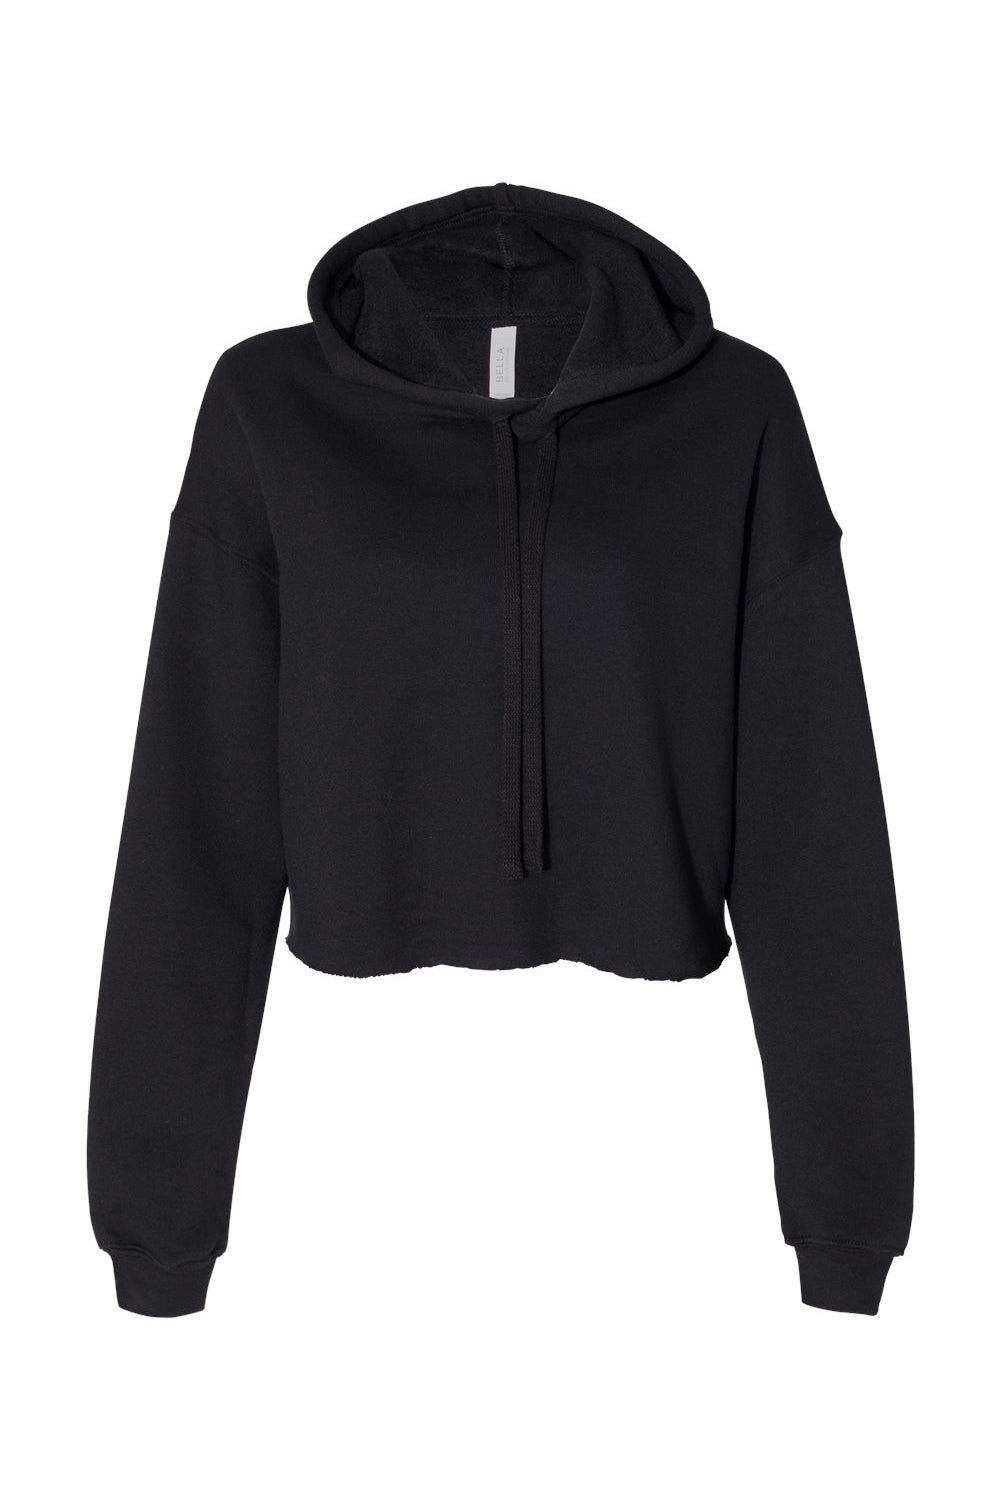 Bella + Canvas BC7502/B7502/7502 Womens Cropped Fleece Hooded Sweatshirt Hoodie Black Flat Front